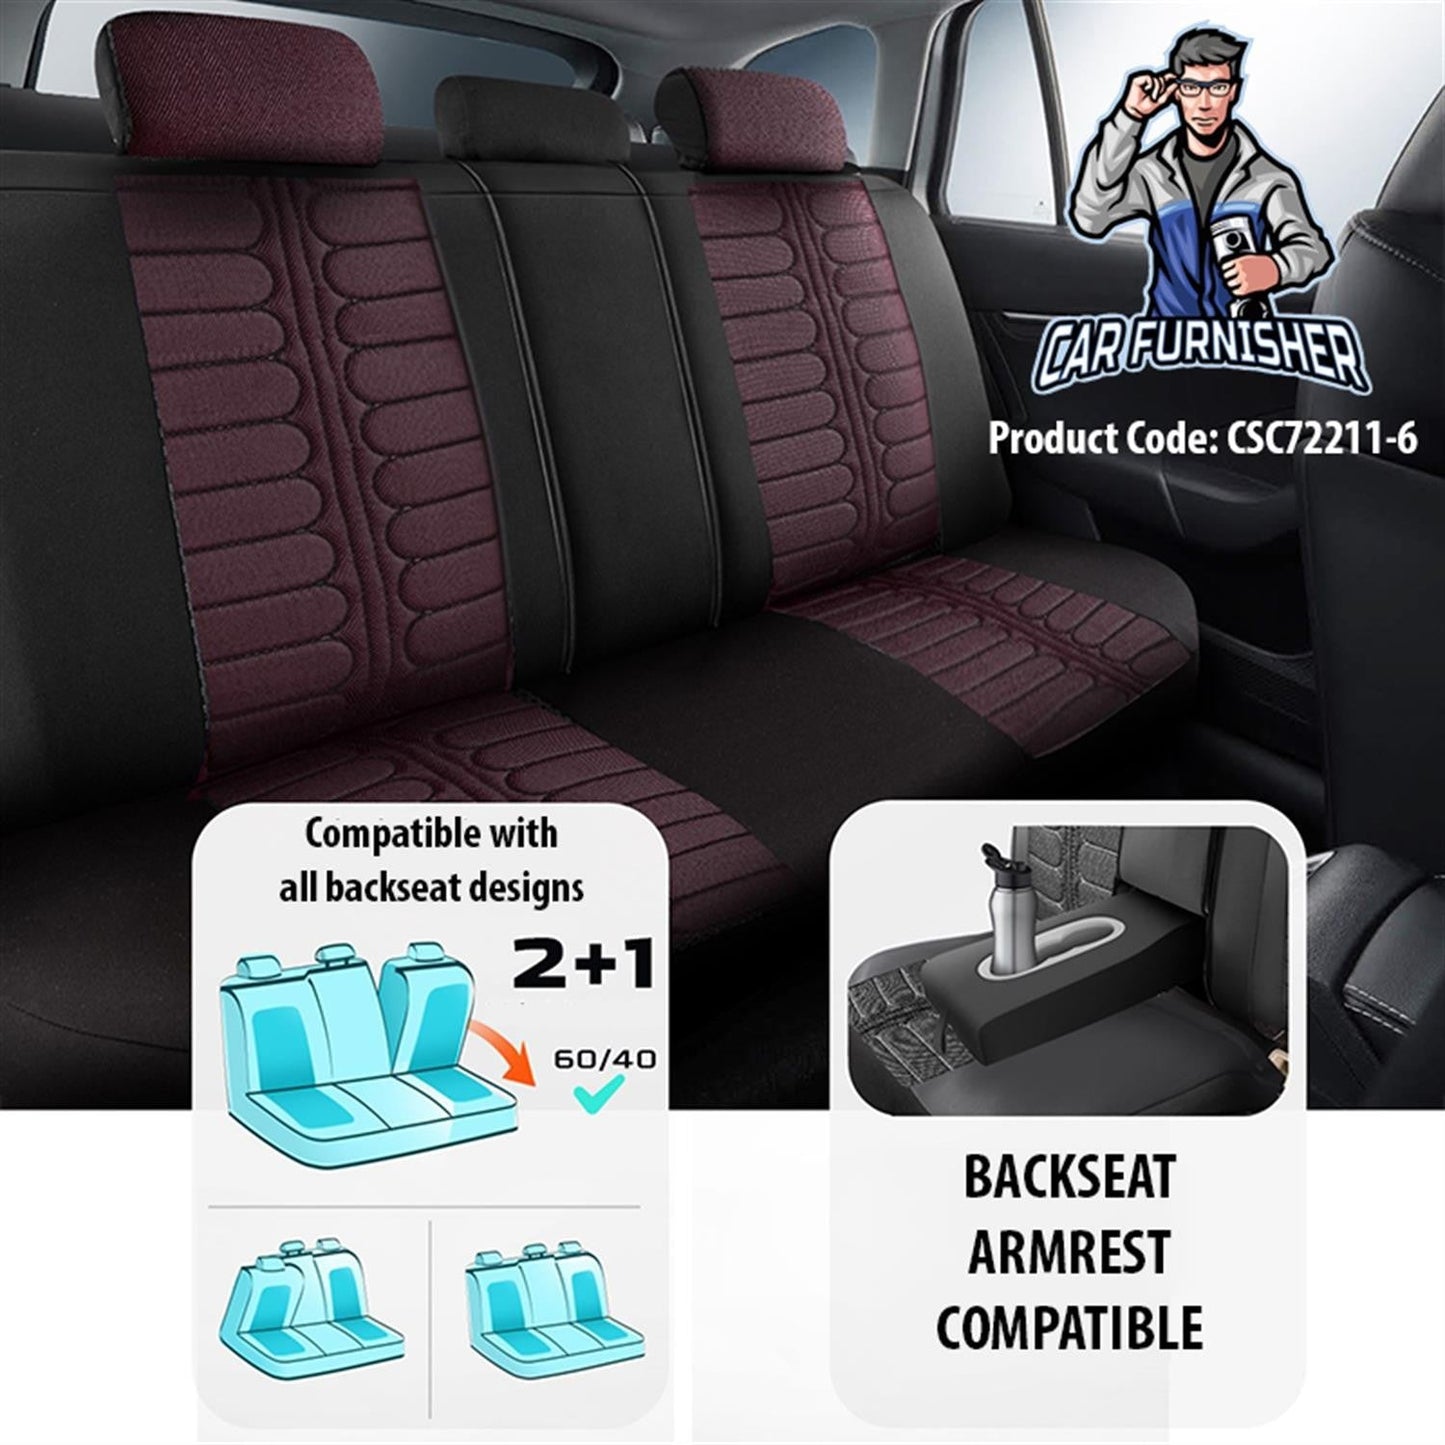 Mercedes 190 Seat Covers London Design Burgundy 5 Seats + Headrests (Full Set) Leather & Jacquard Fabric